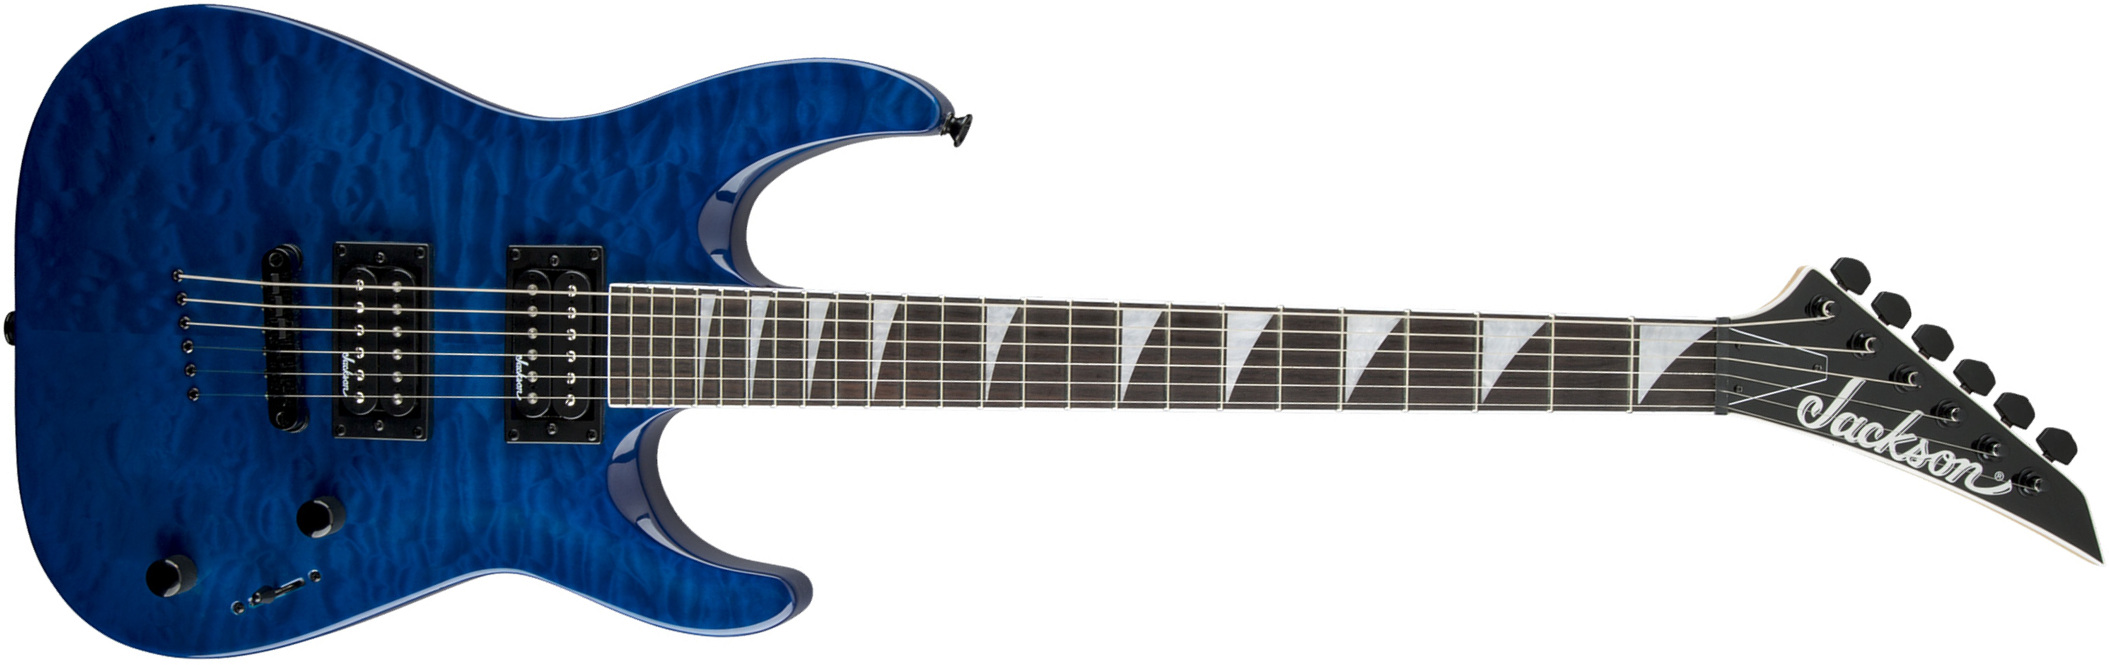 Jackson Dinky Arch Top Js32tq Dka  Hh Ht Ama - Transparent Blue - E-Gitarre aus Metall - Main picture